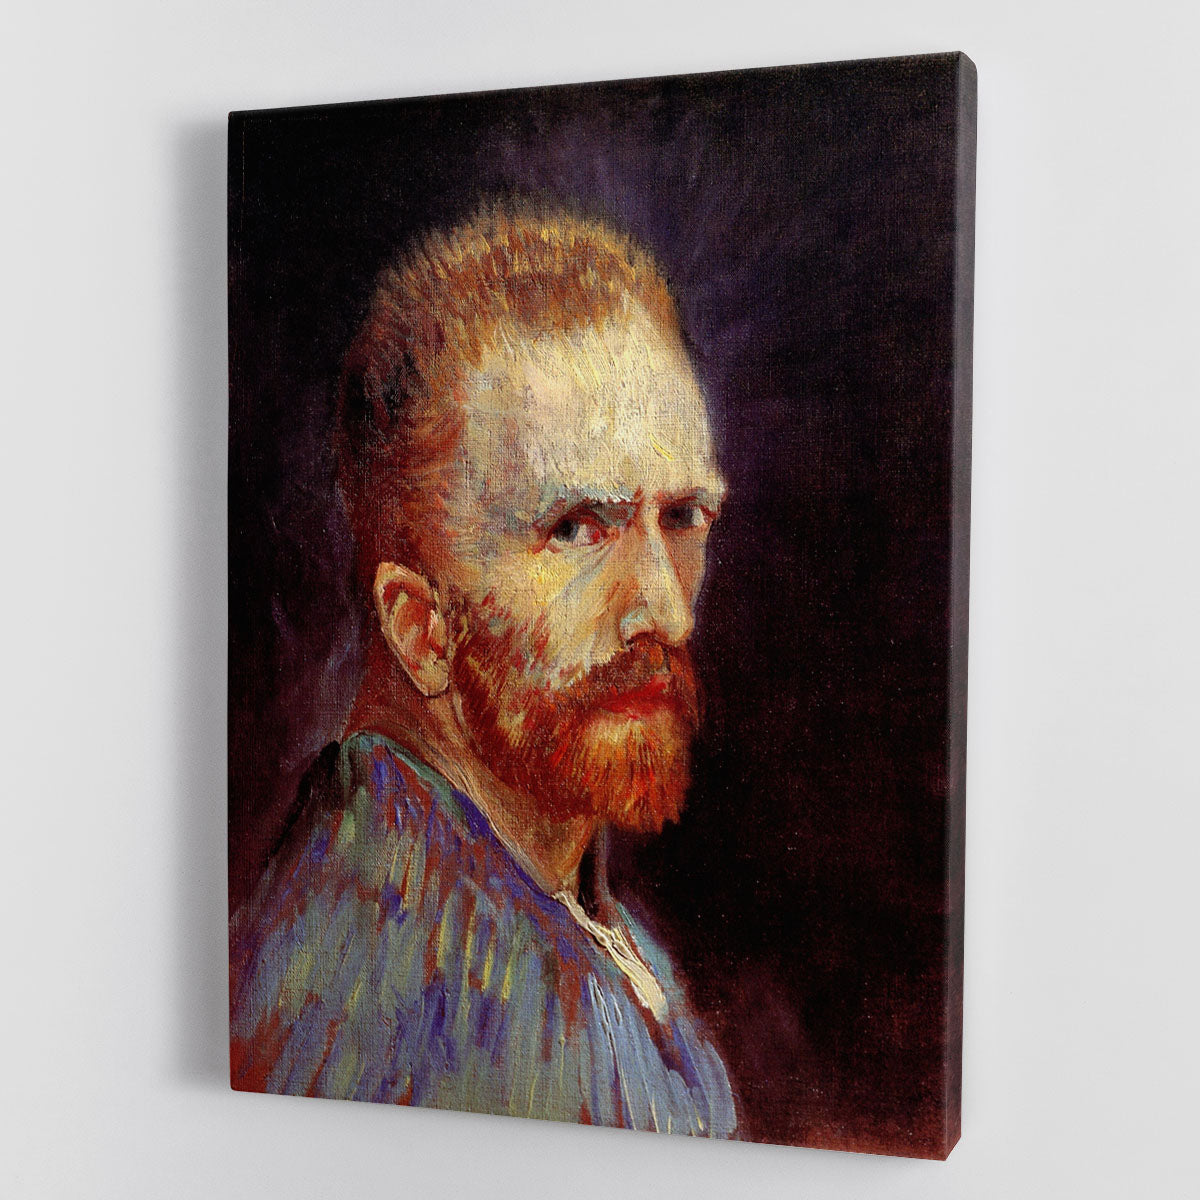 Self-Portrait 9 by Van Gogh Canvas Print or Poster - Canvas Art Rocks - 1